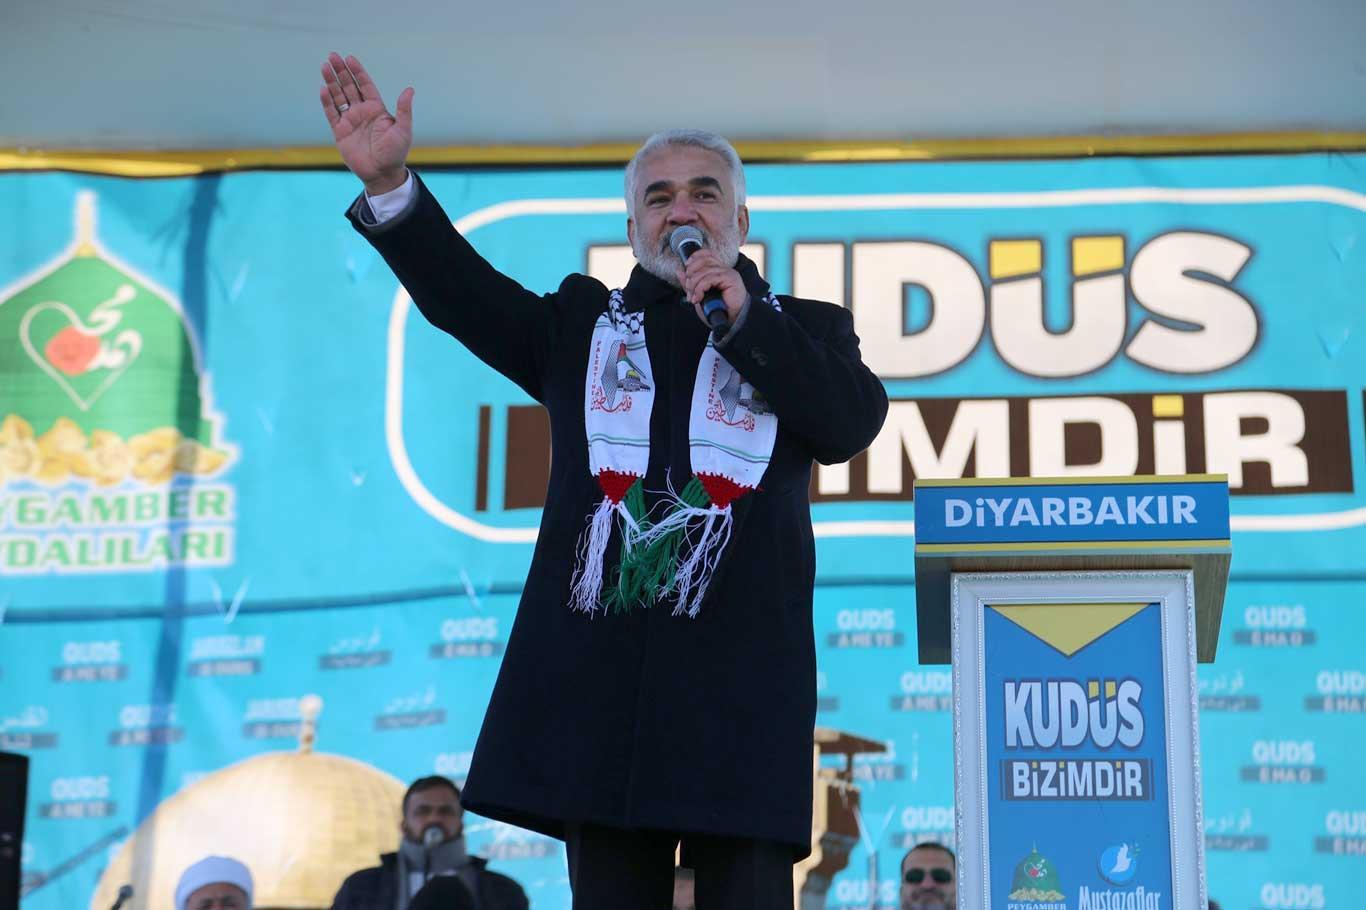 Yapıcıoğlu: We are ready to pay every price for Quds